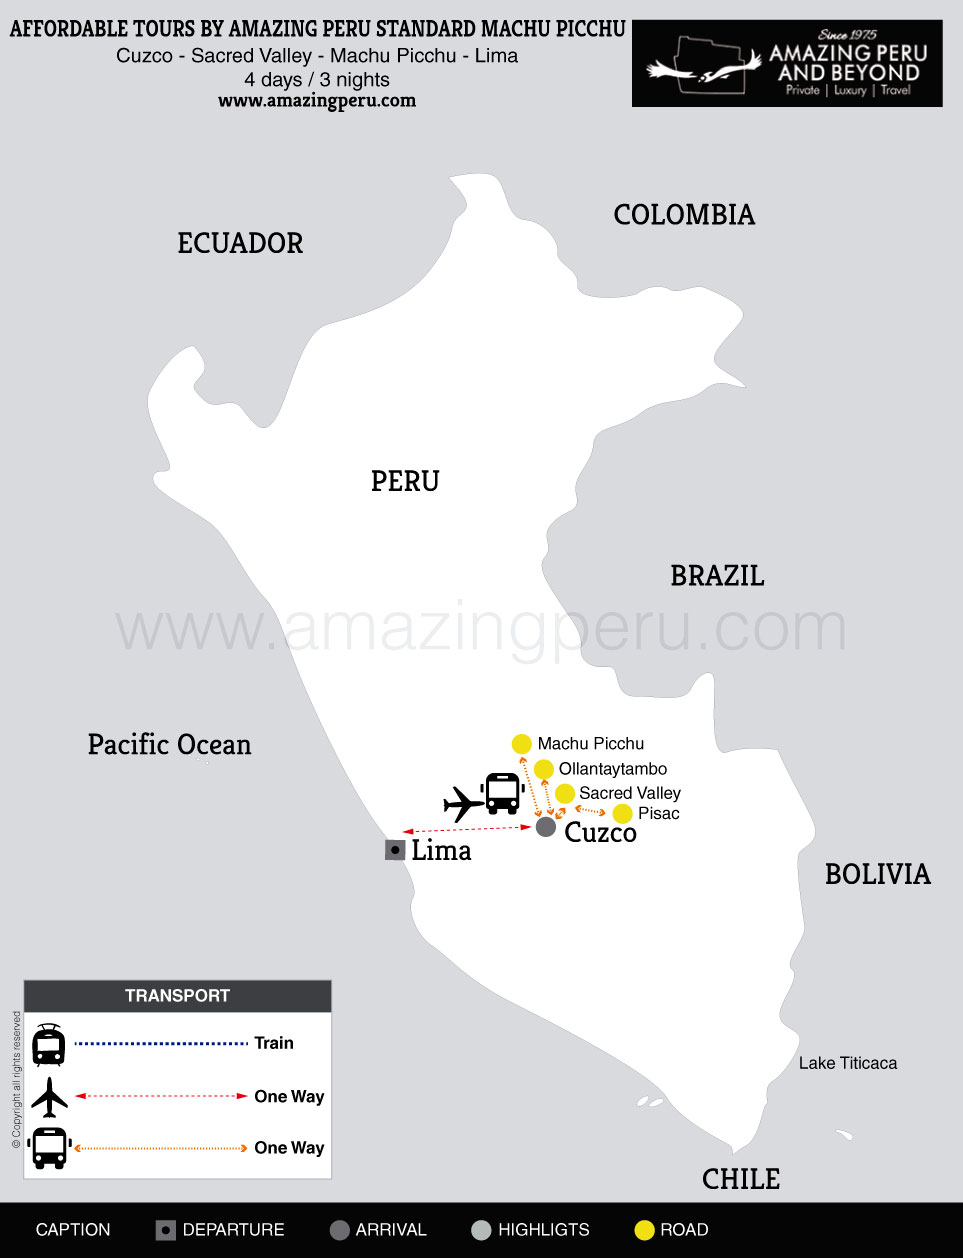 2022 Affordable Tours by Amazing Peru Standard Machu Picchu - 4 days / 3 nights.